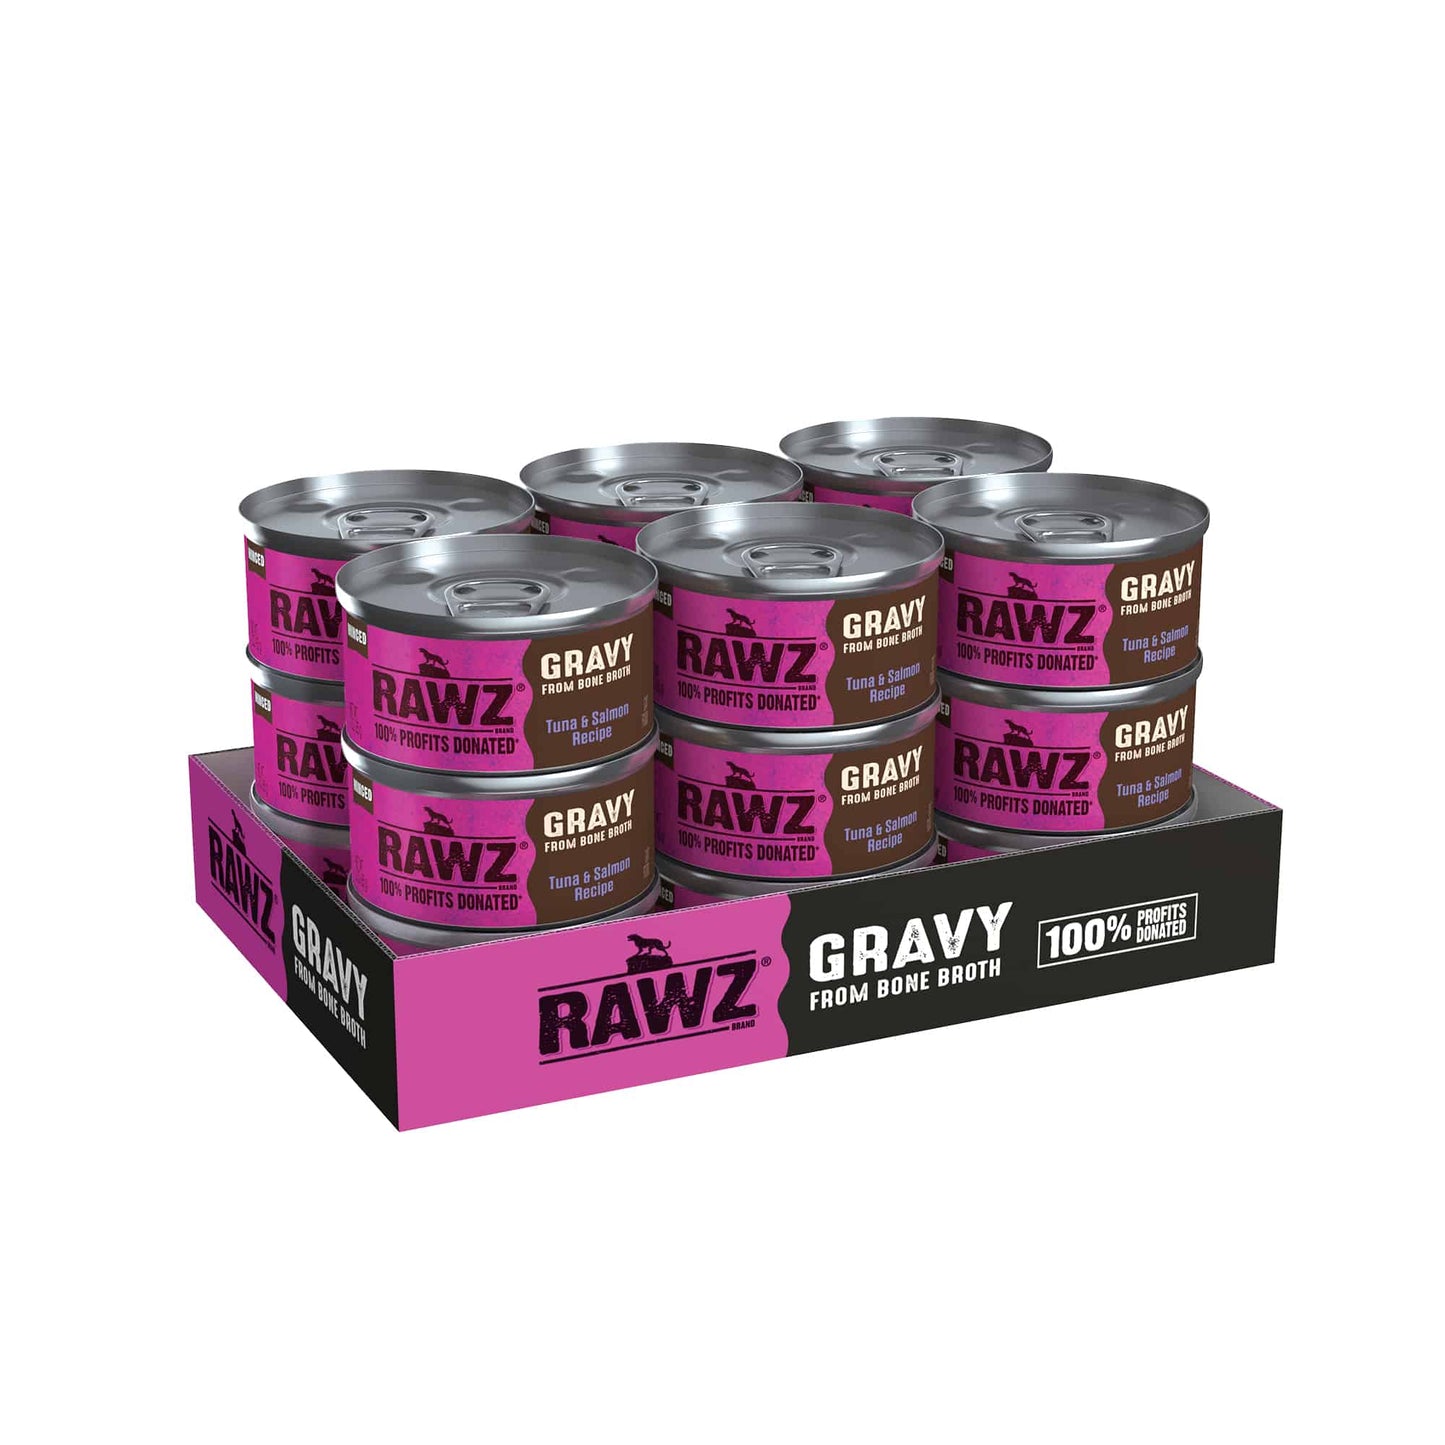 RAWZ Gravy Tuna & Salmon Canned Cat Food